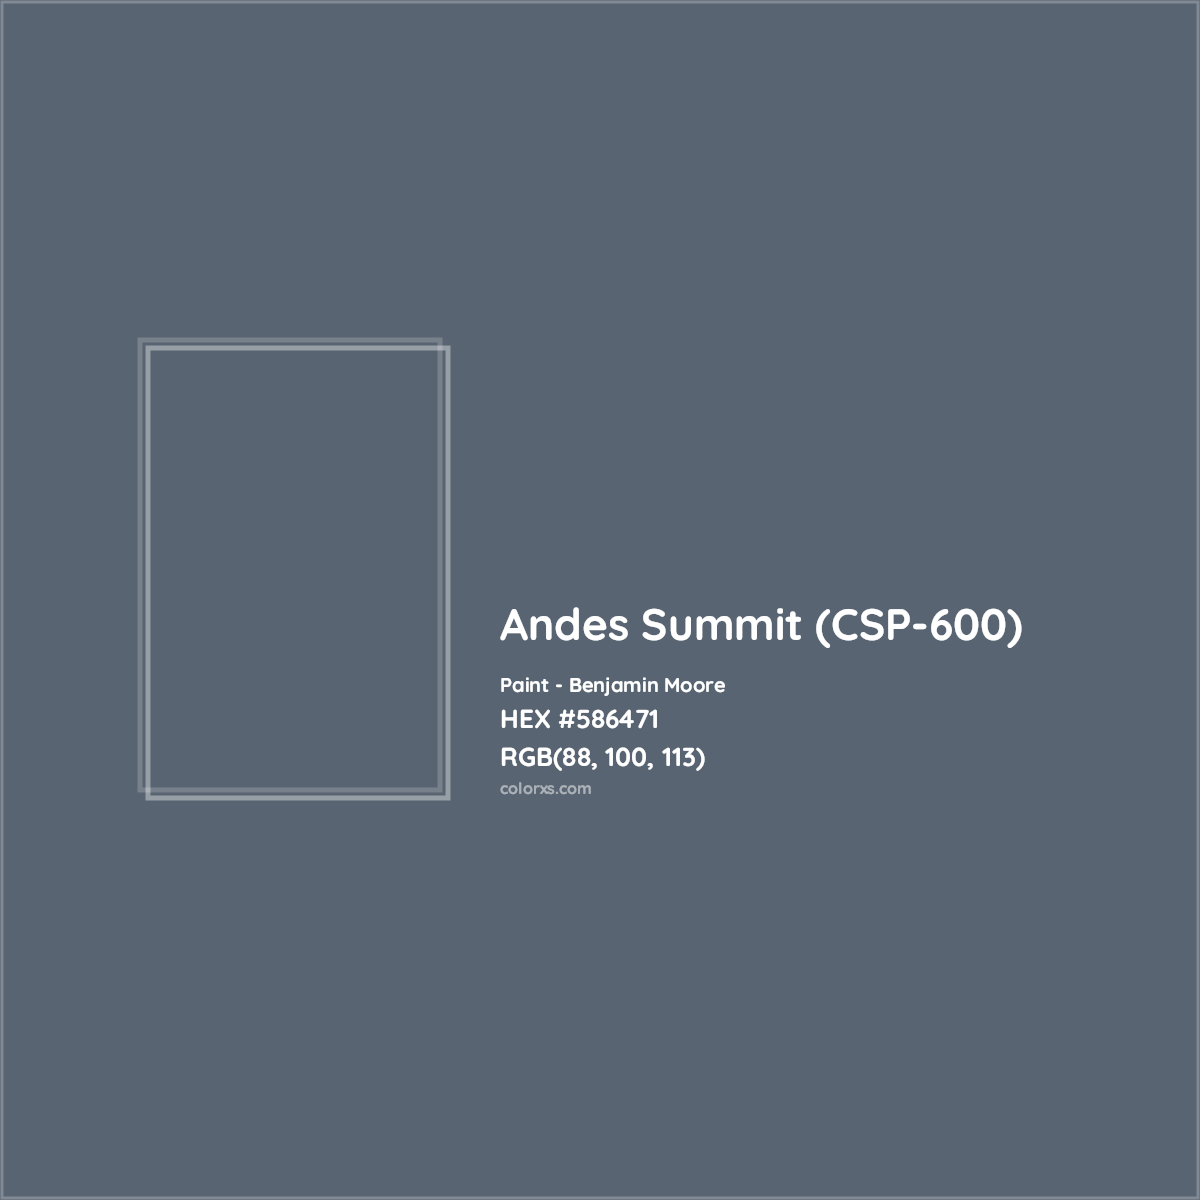 HEX #586471 Andes Summit (CSP-600) Paint Benjamin Moore - Color Code